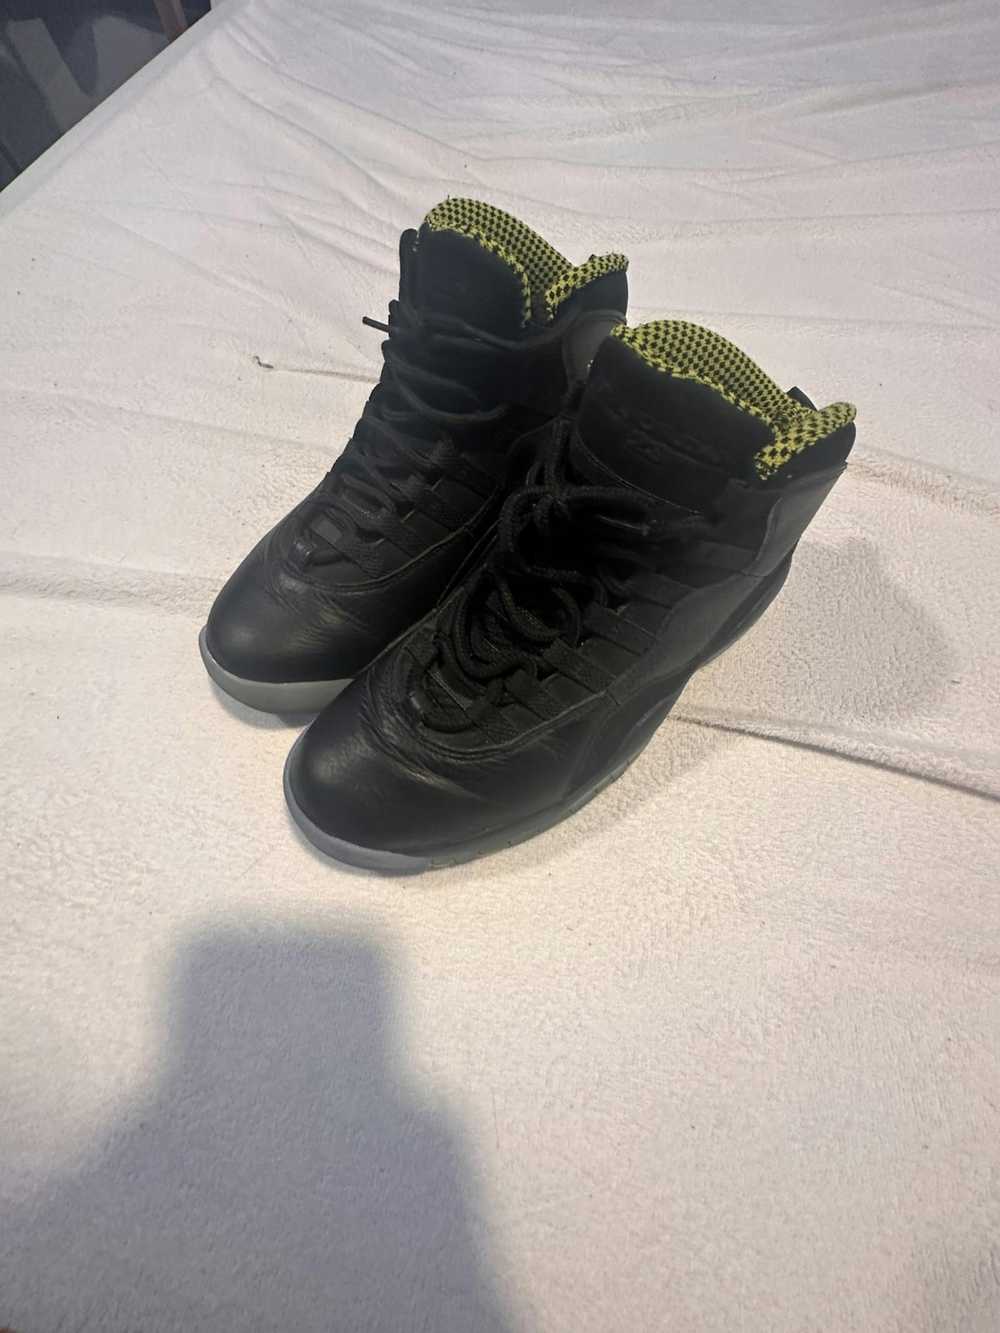 Jordan Brand × Nike Jordan retro 10 venoms - image 2